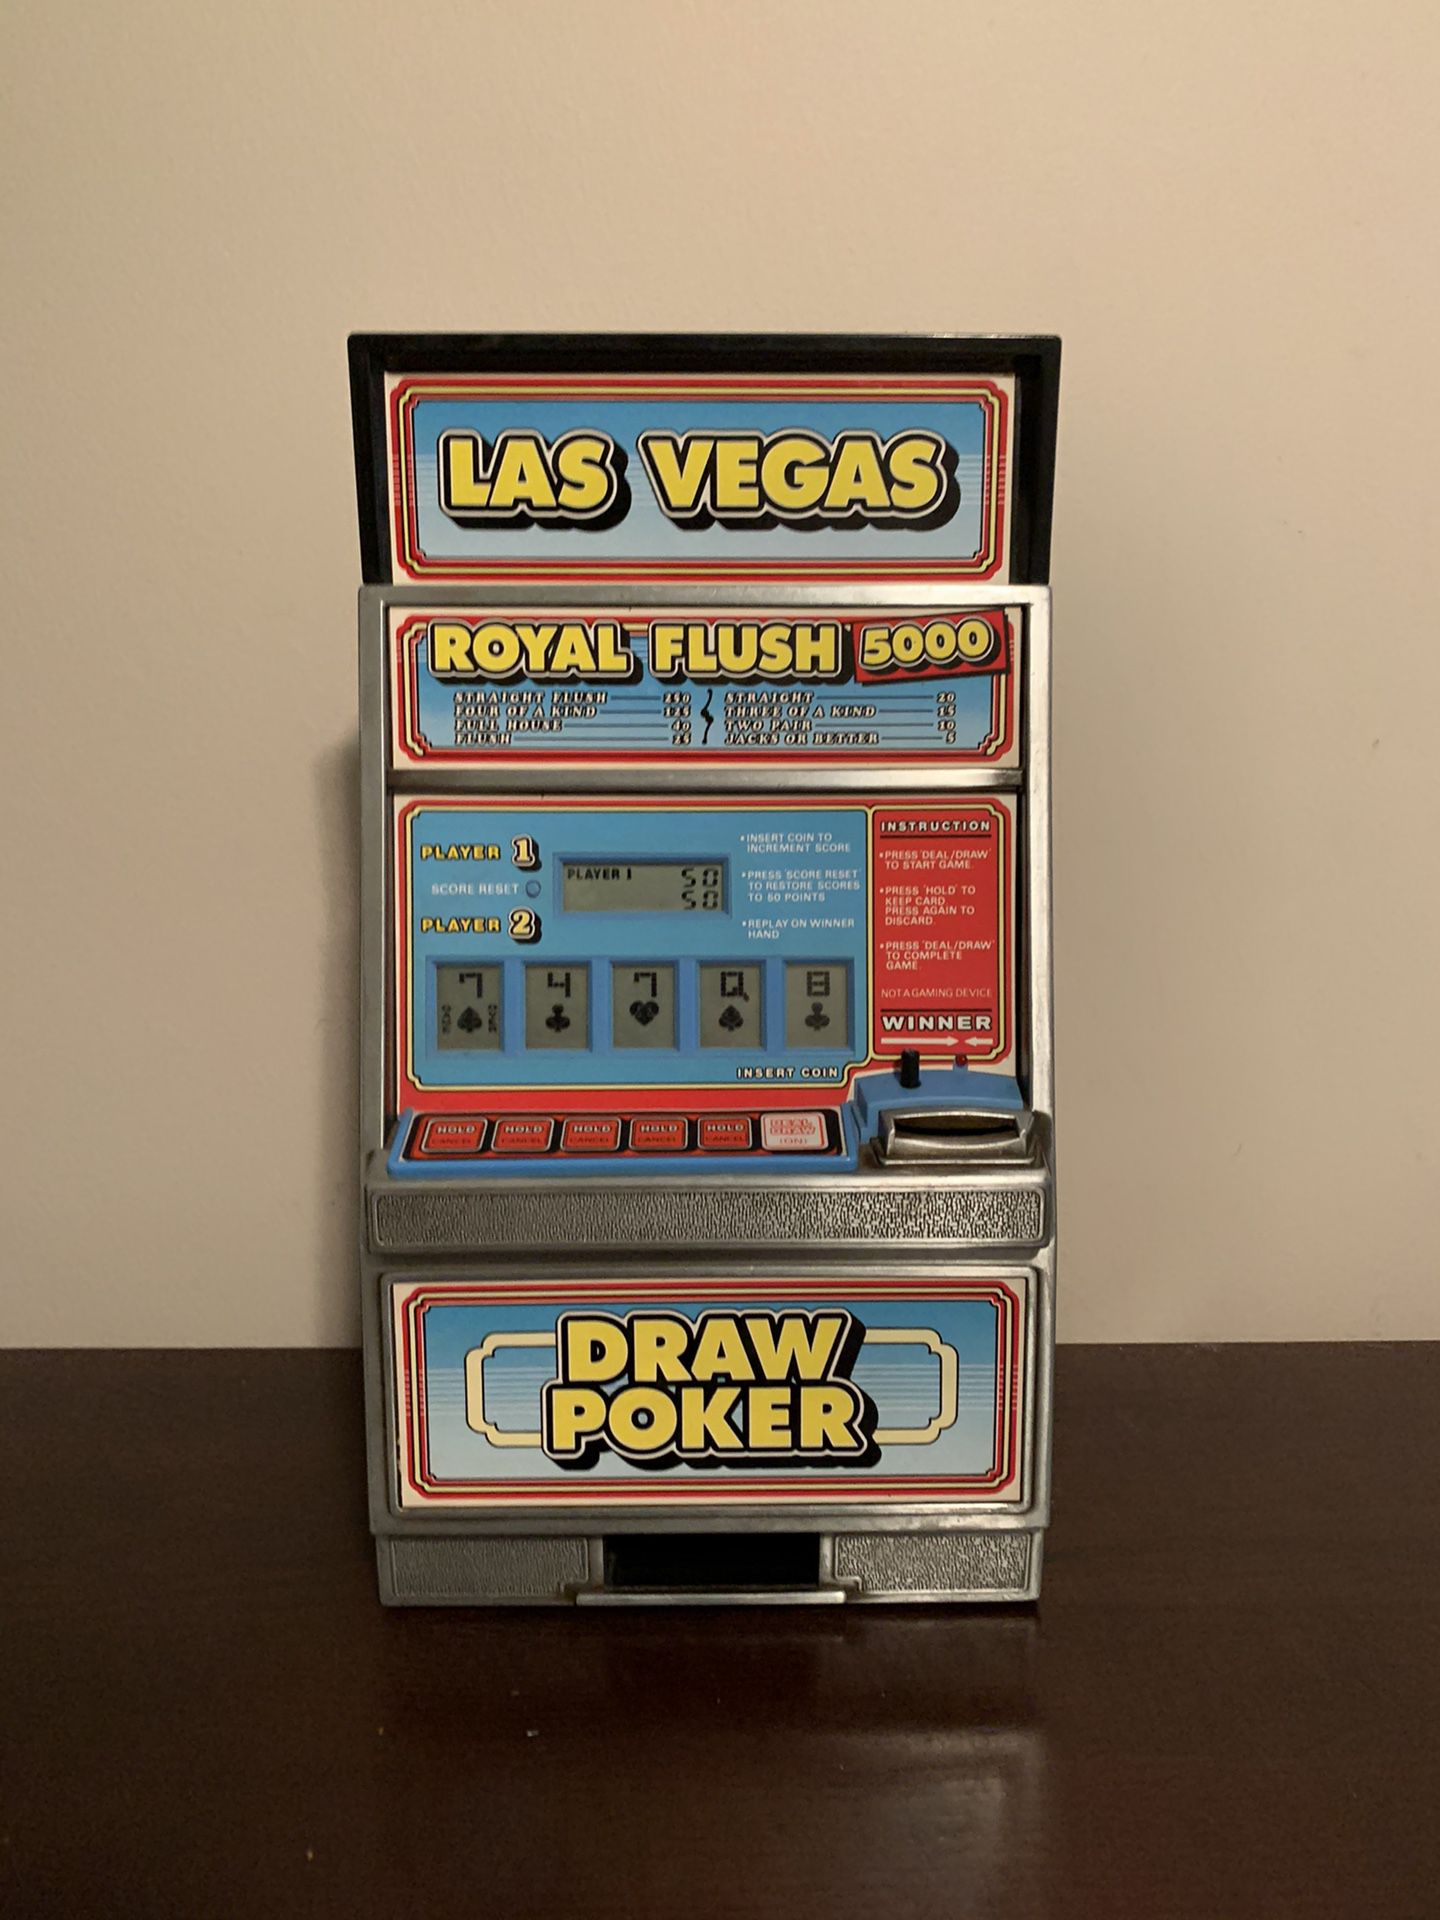 Las Vegas royal flush 5000 game